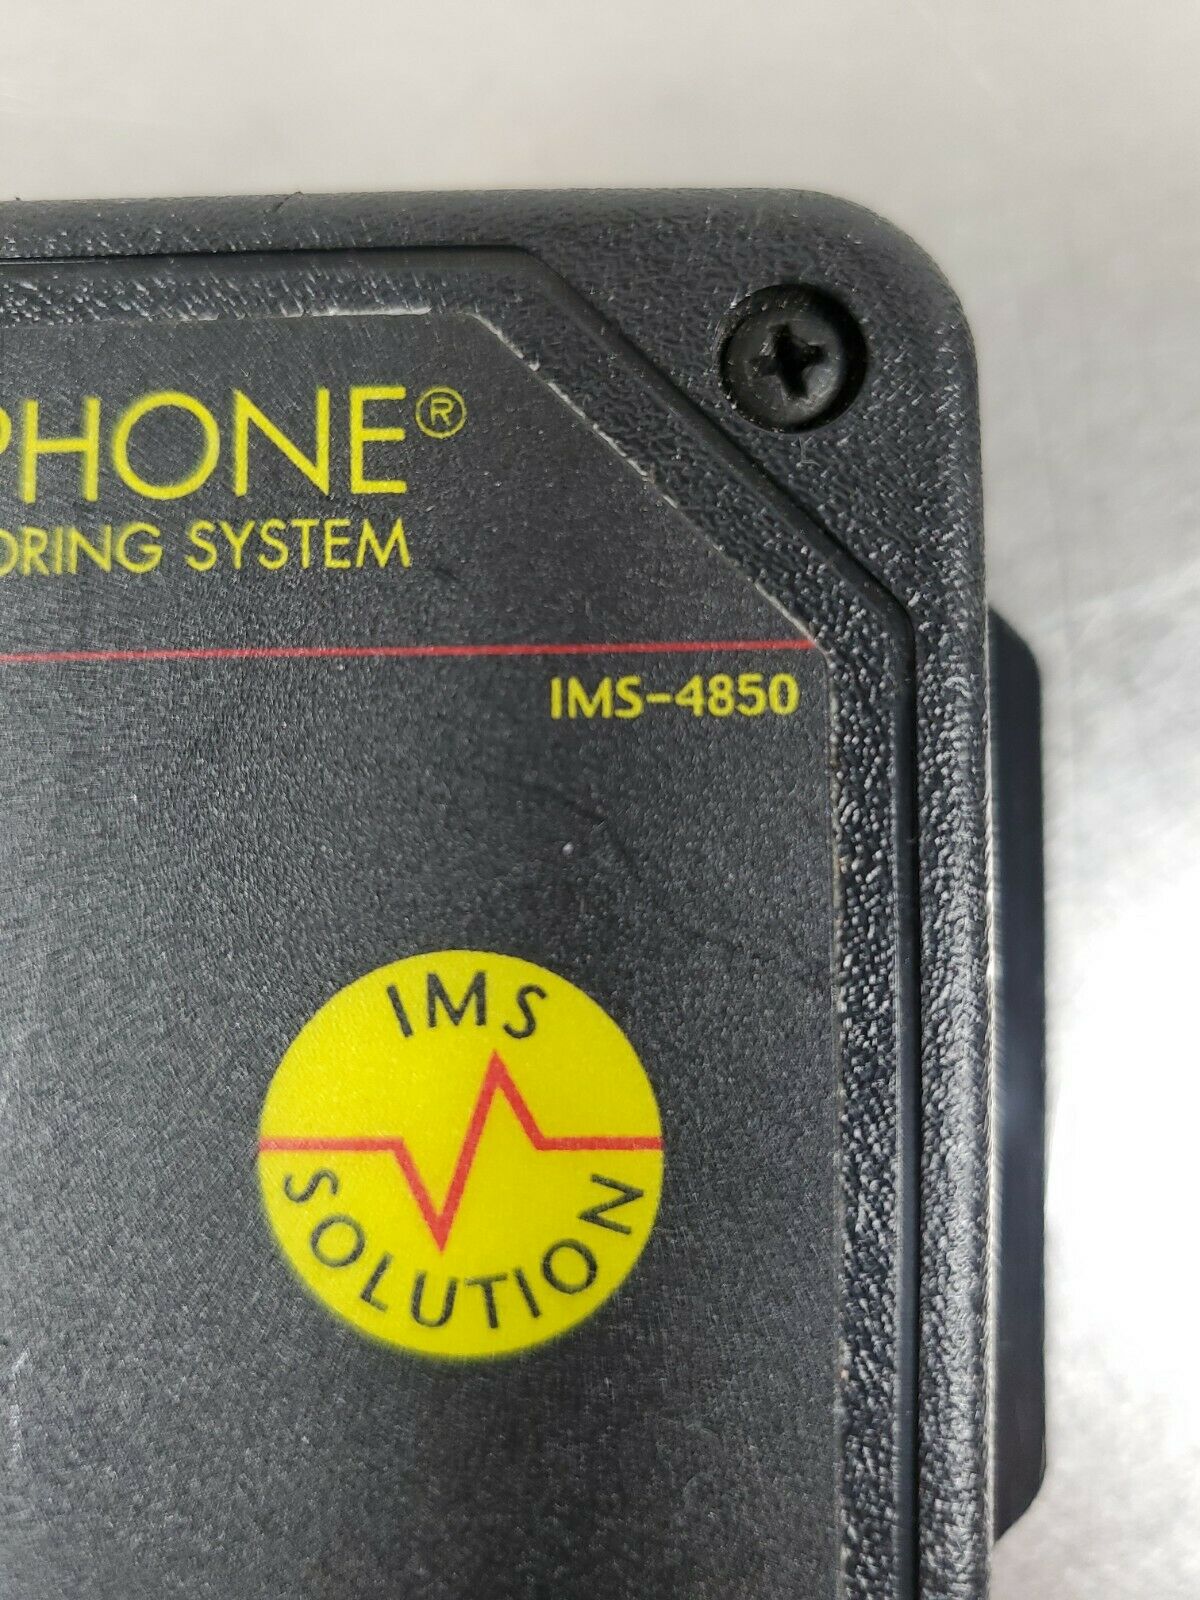 Sensaphone IMS-4850 Dry Contact Bridge.          4C